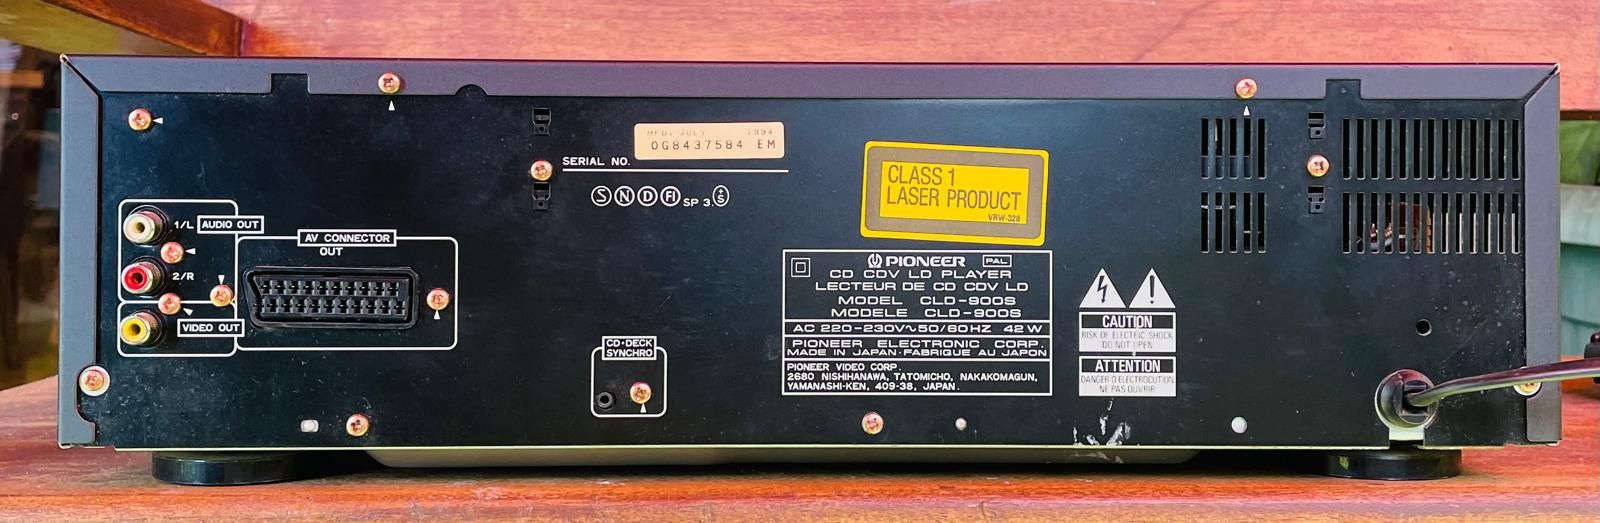 Pioneer CLD-900S LaserDisc Player